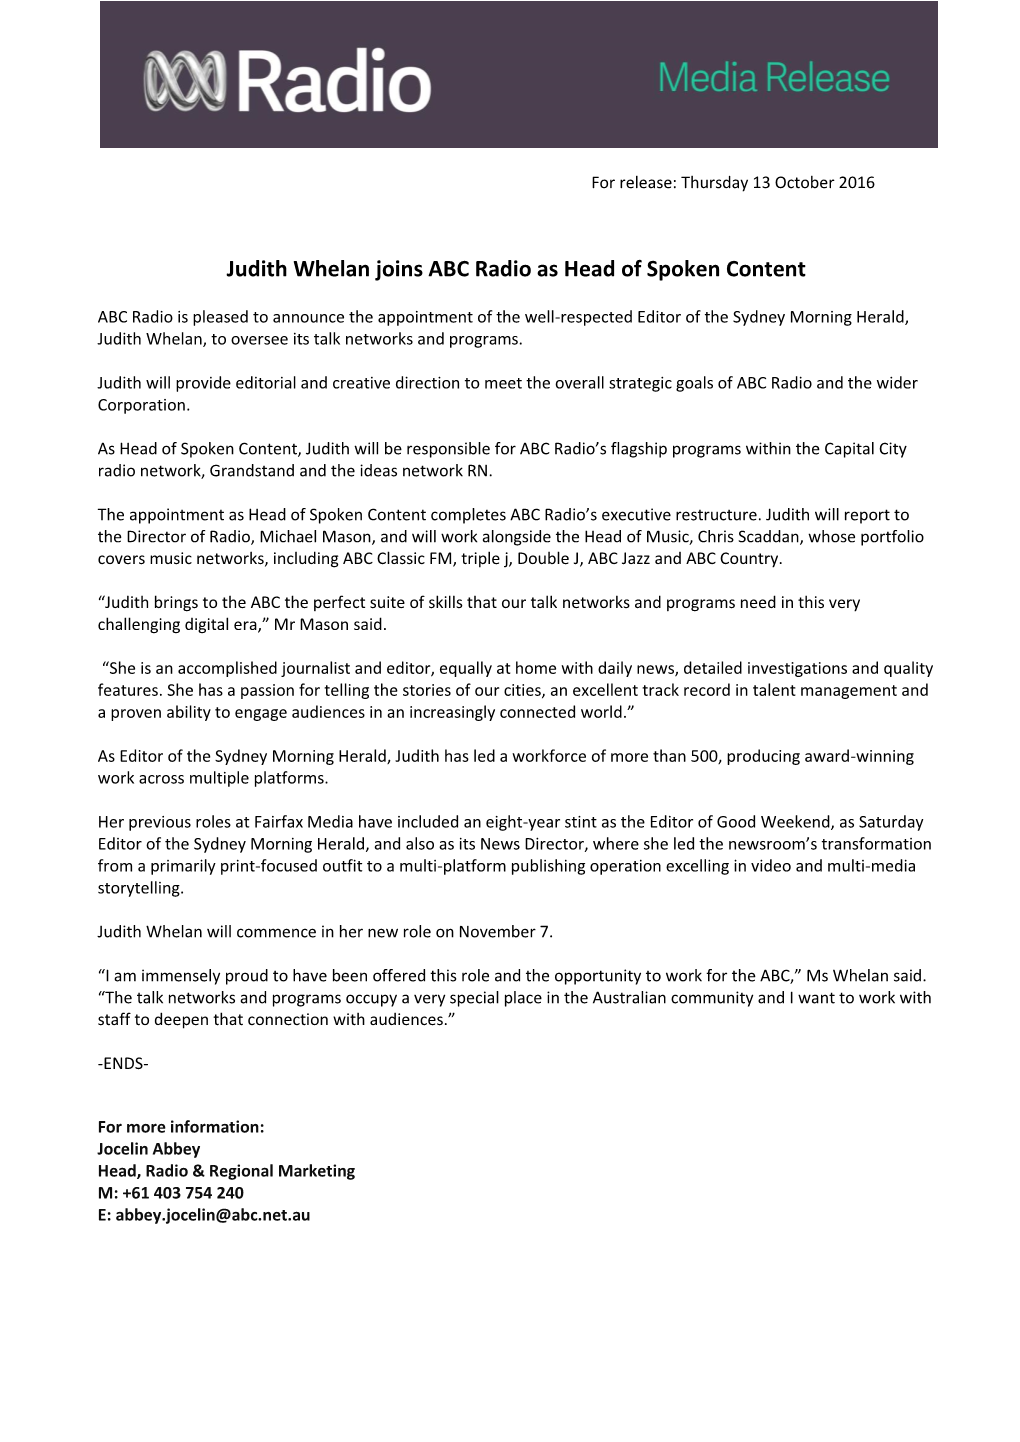 Judith Whelan Joins ABC Radio As Head of Spoken Content